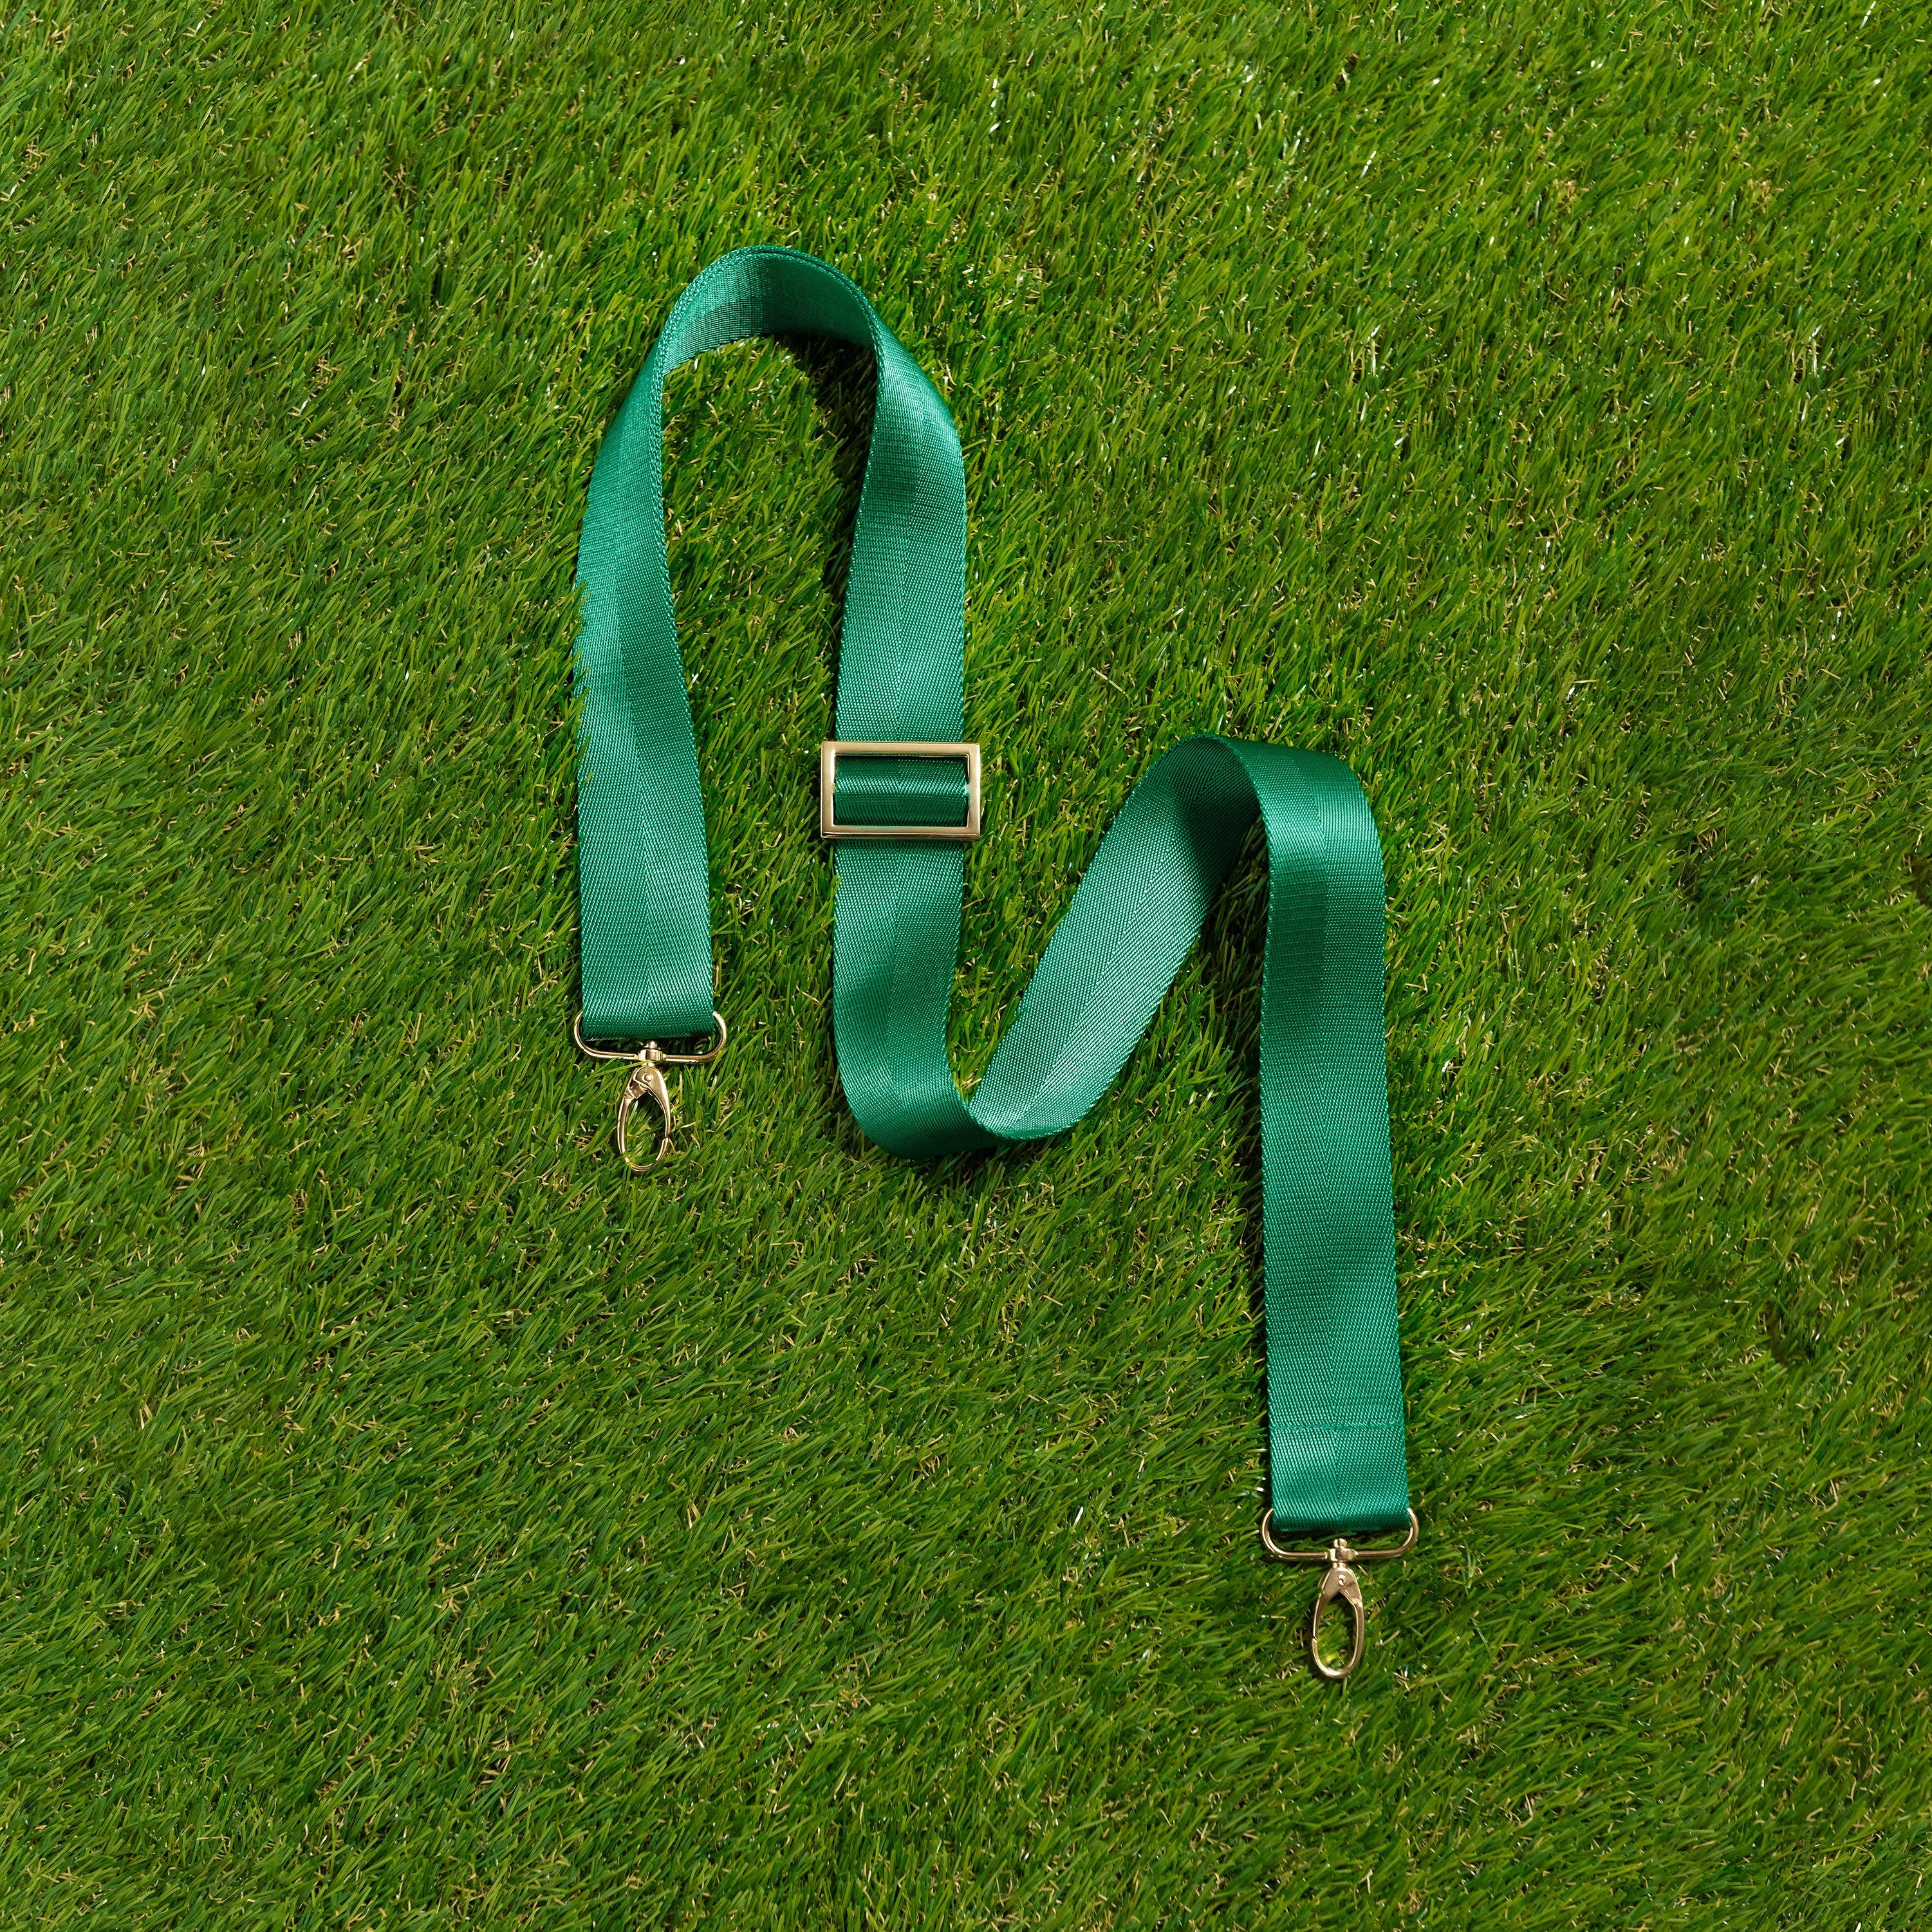 Skyler Blue’s adjustable, nylon webbing dark green fanny pack strap with herringbone weave and gold hardware.  